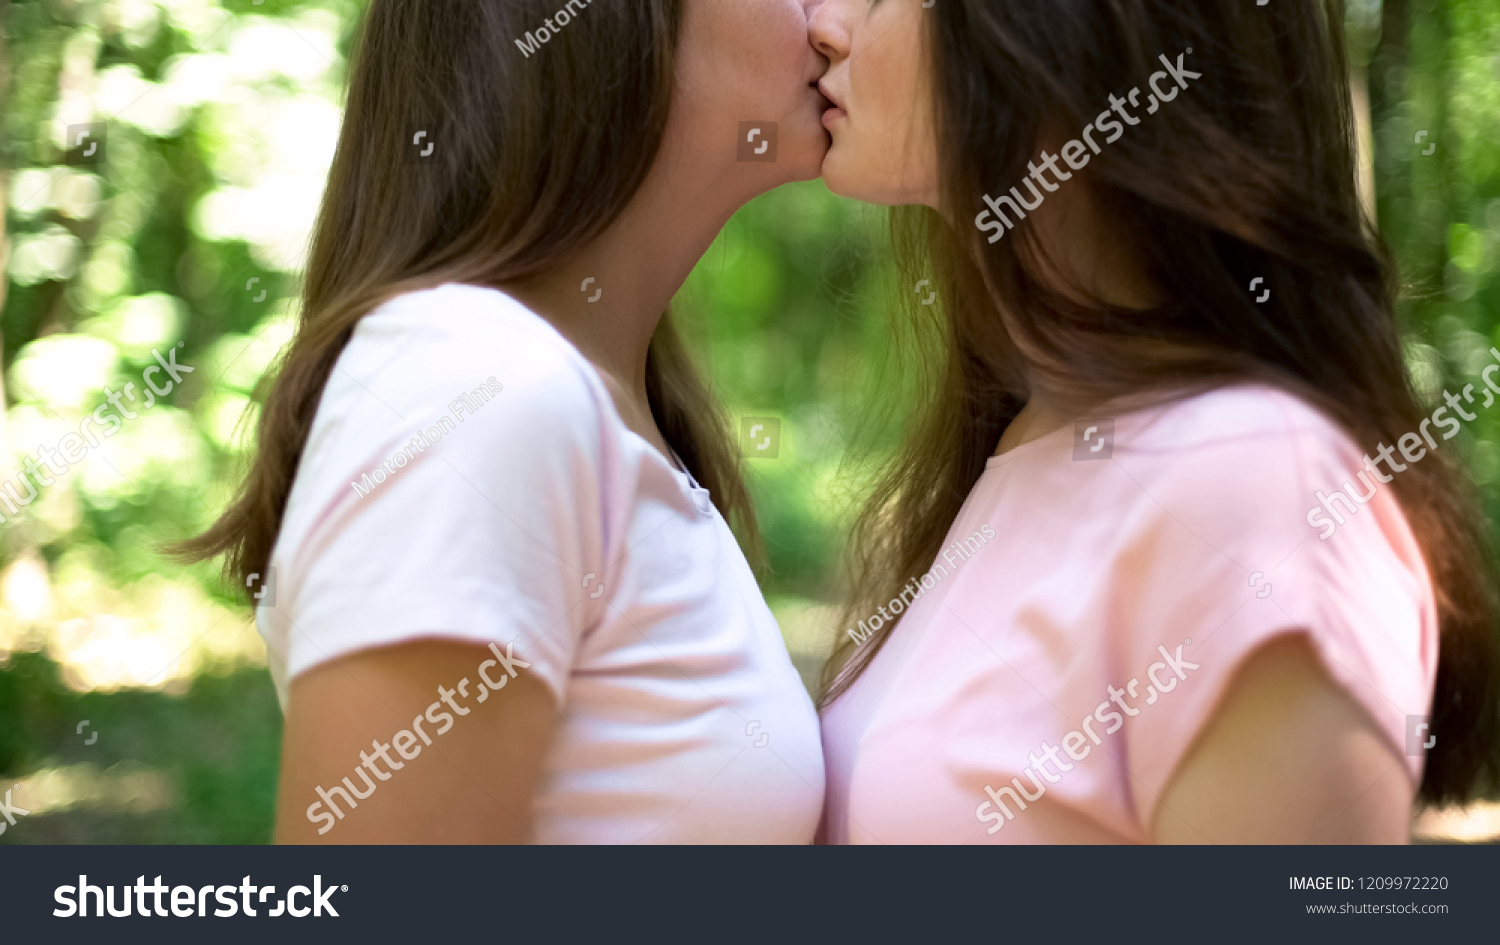 amit dagar recommends Lesbians Kissing Having Sex